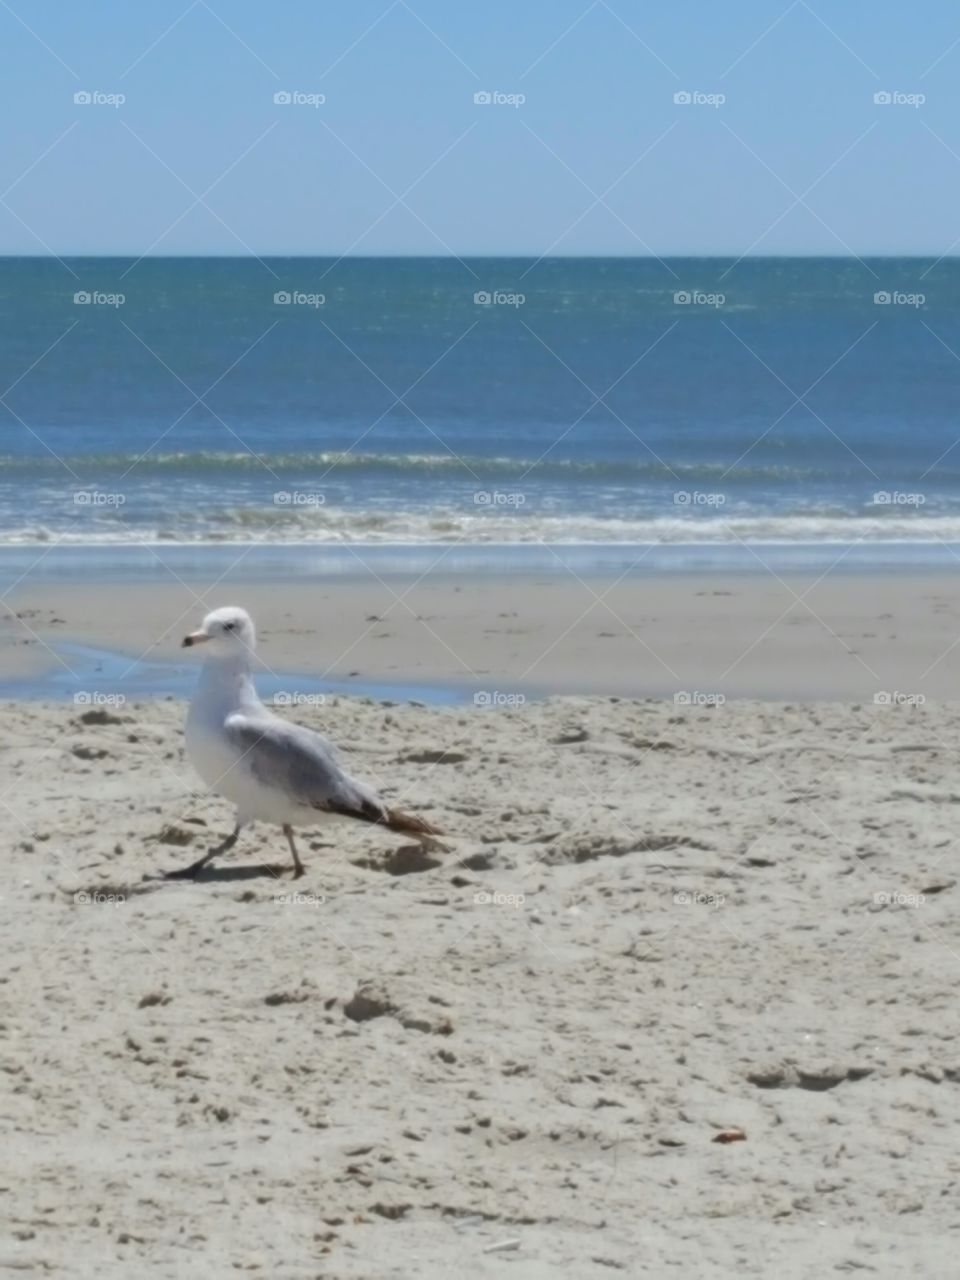 sea gull on the shore